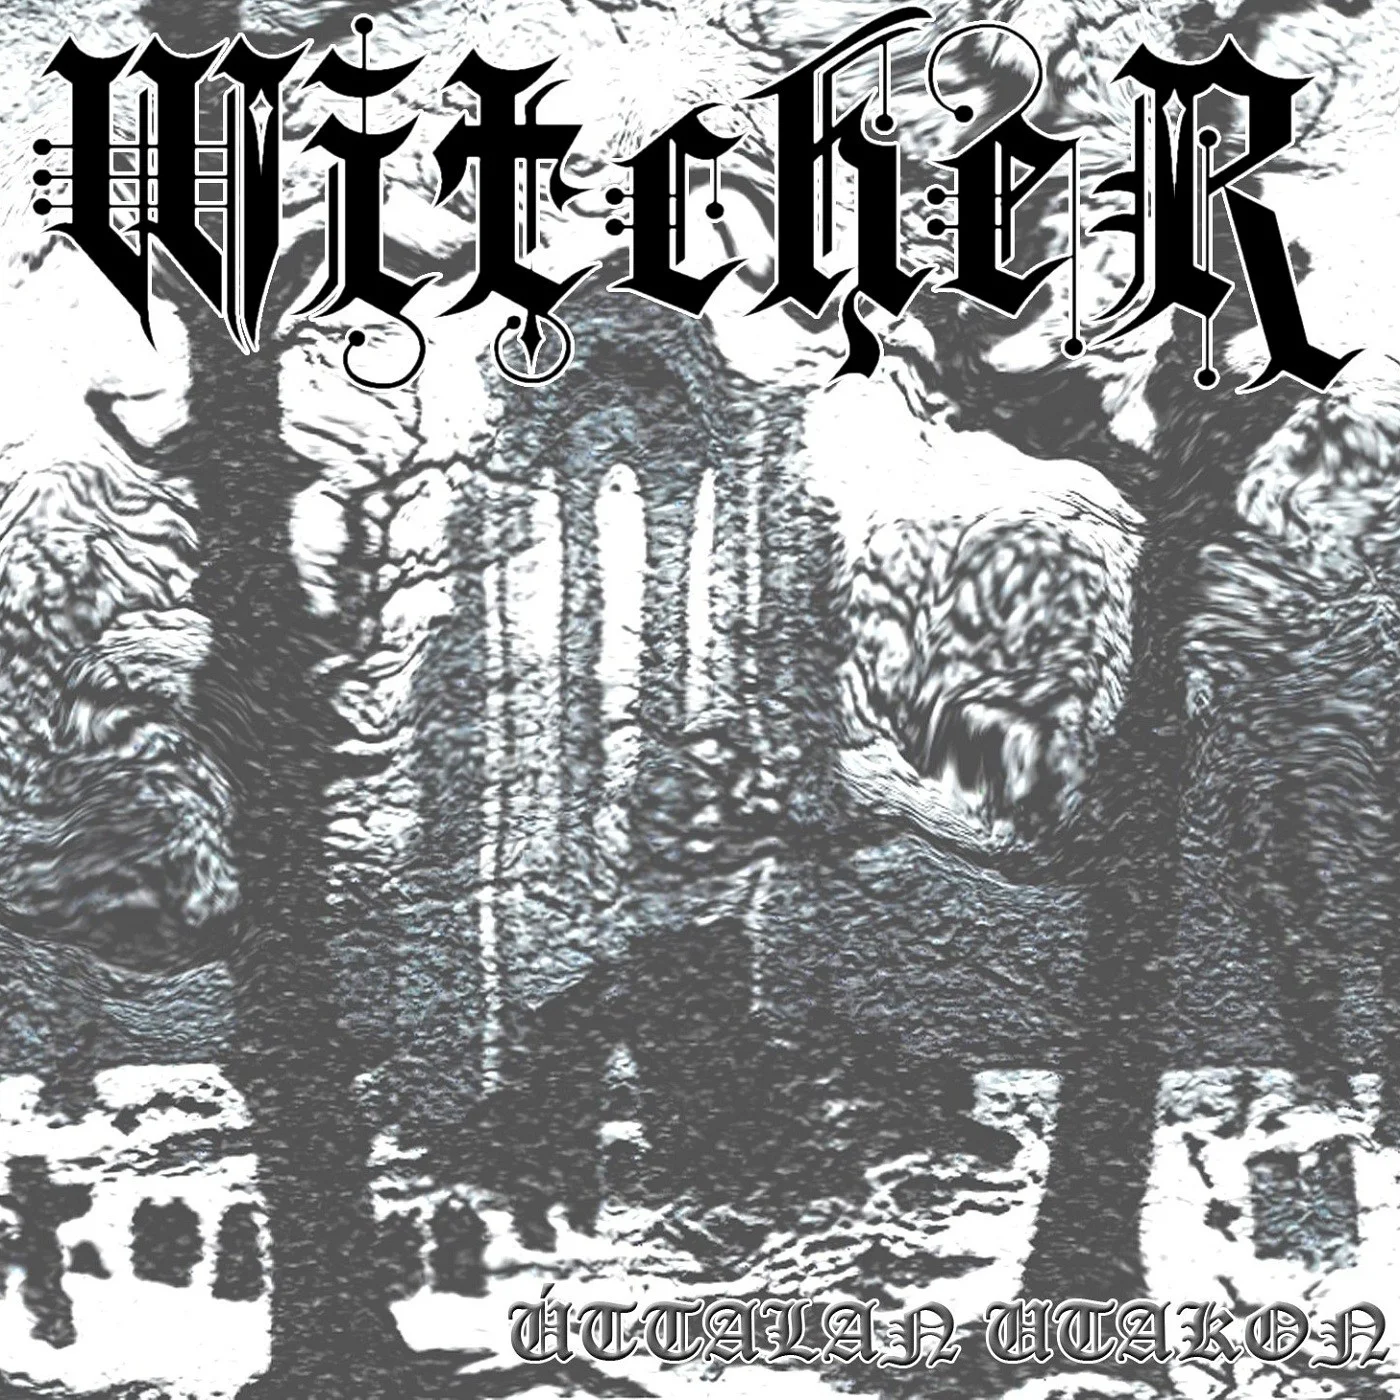 WitcheR – Úttalan utakon cover feature